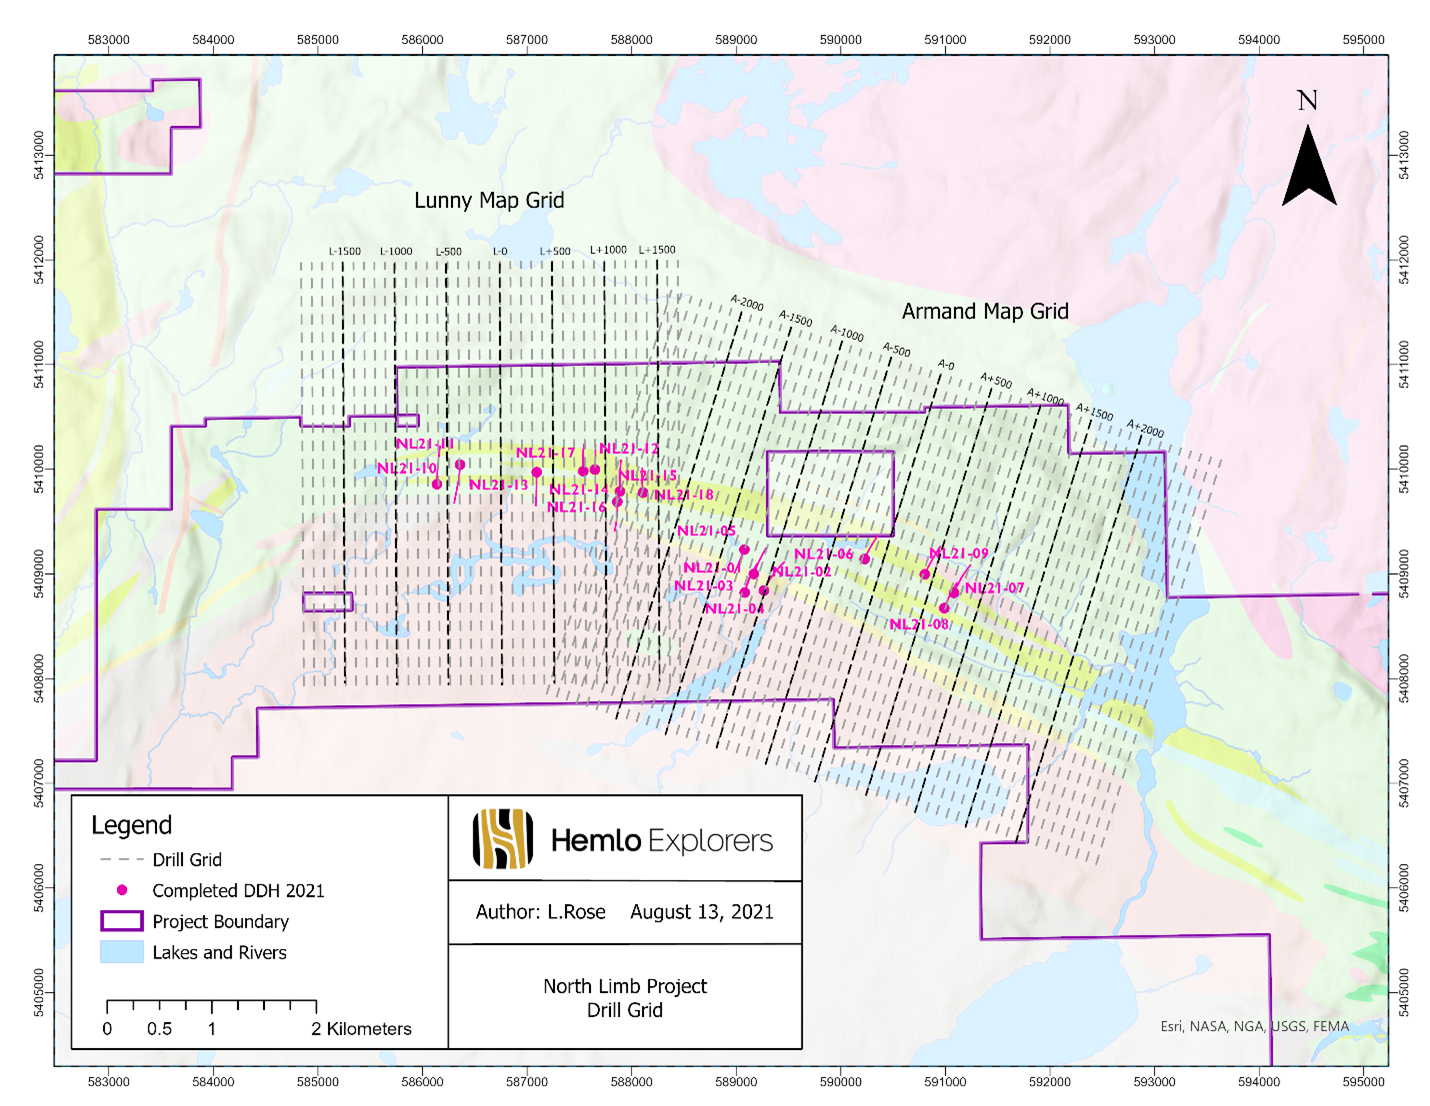 Figure #1 – North Limb Project Drill Grids Plan Map